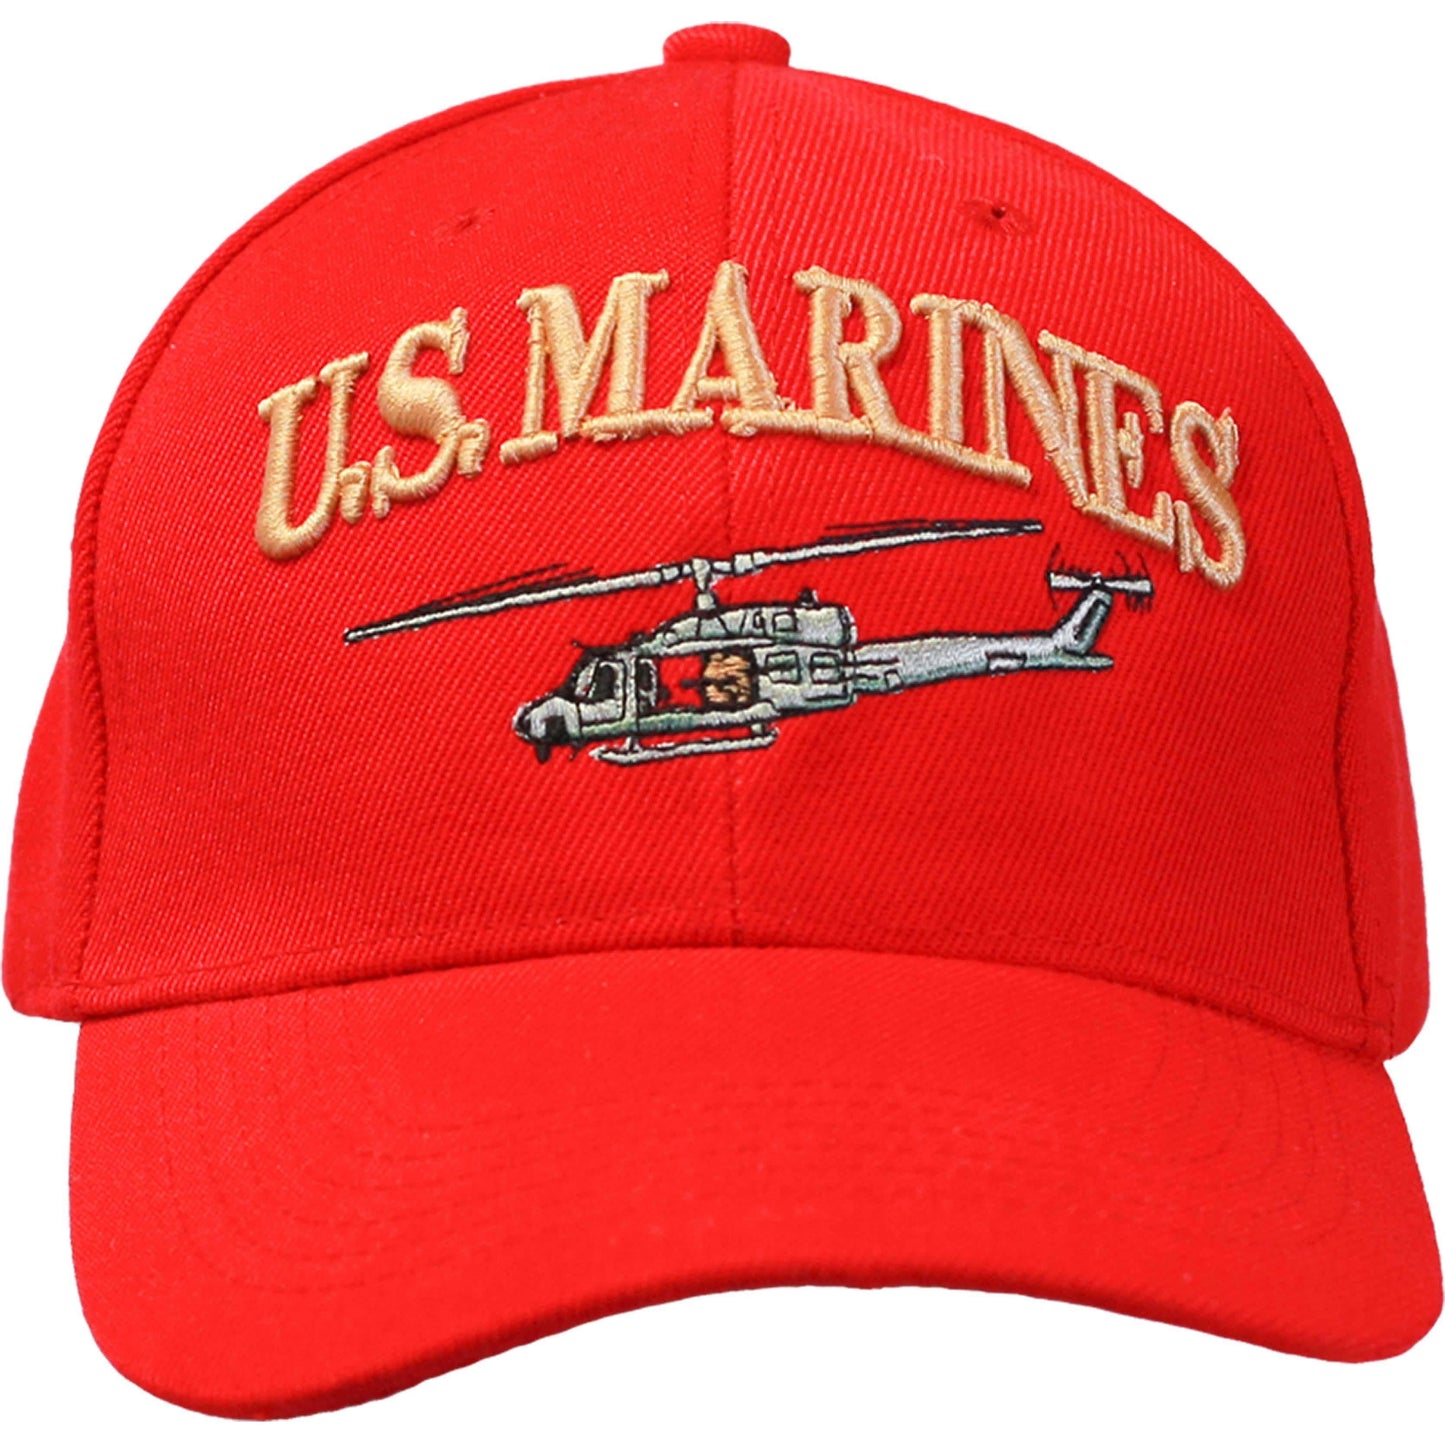 USMC Helicopter Cap - Military Republic